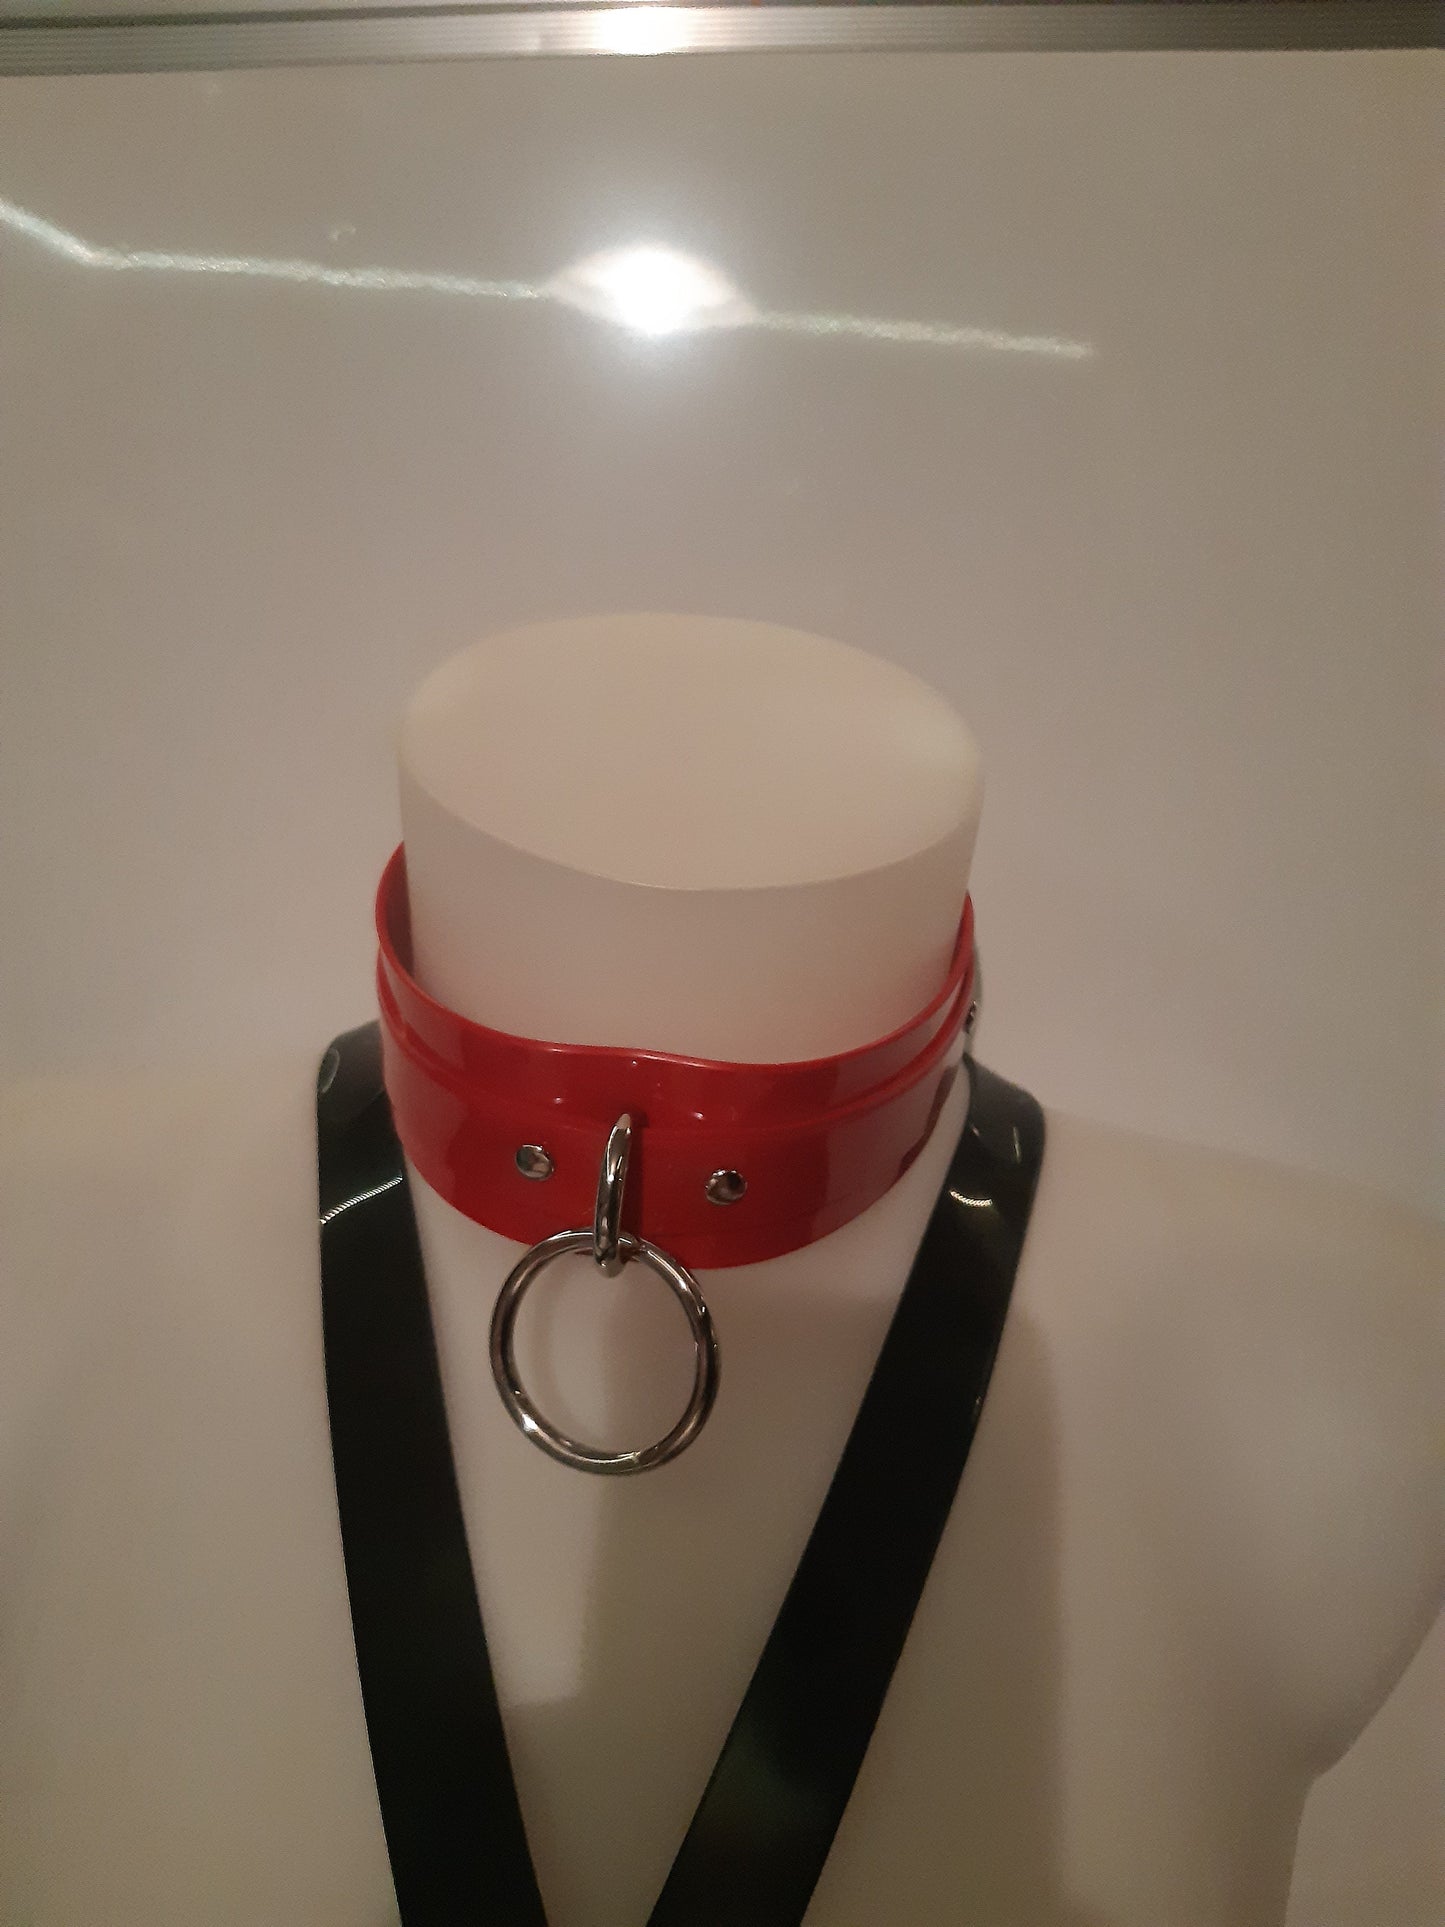 Red PVC neck collar